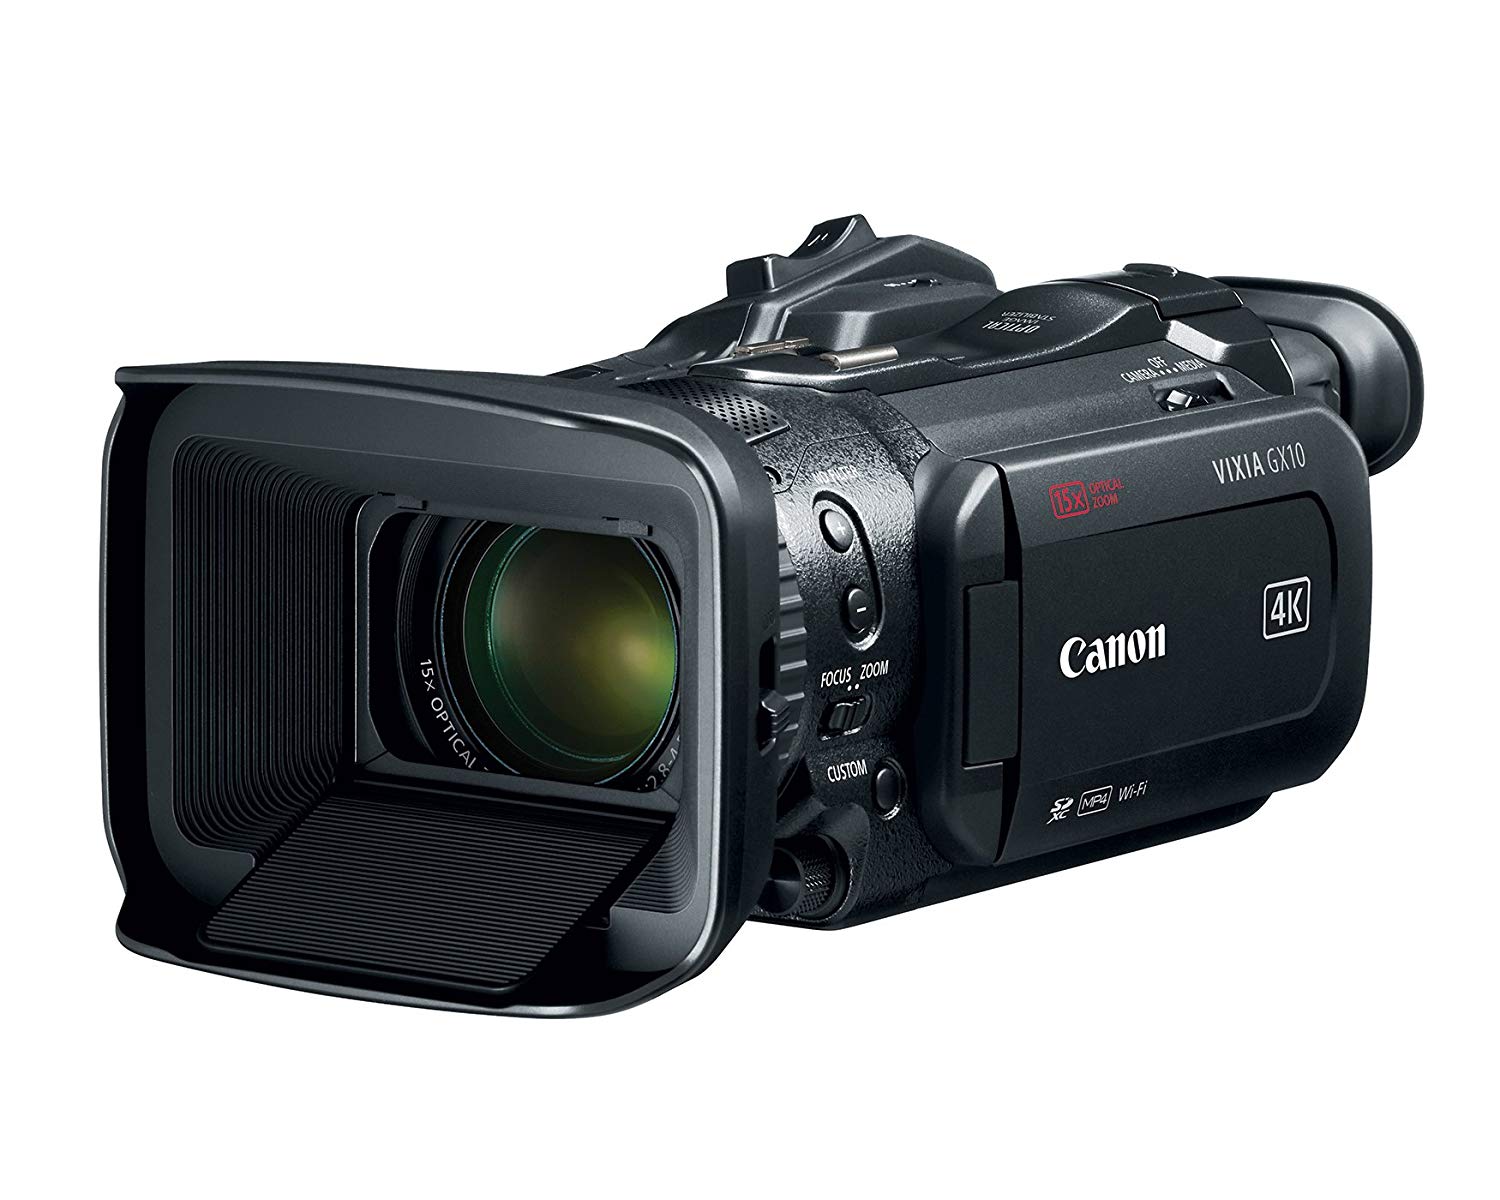 Canon Cyfrowa kamera wideo  Vixia GX10 z Wi-Fi 4K Ultra HD